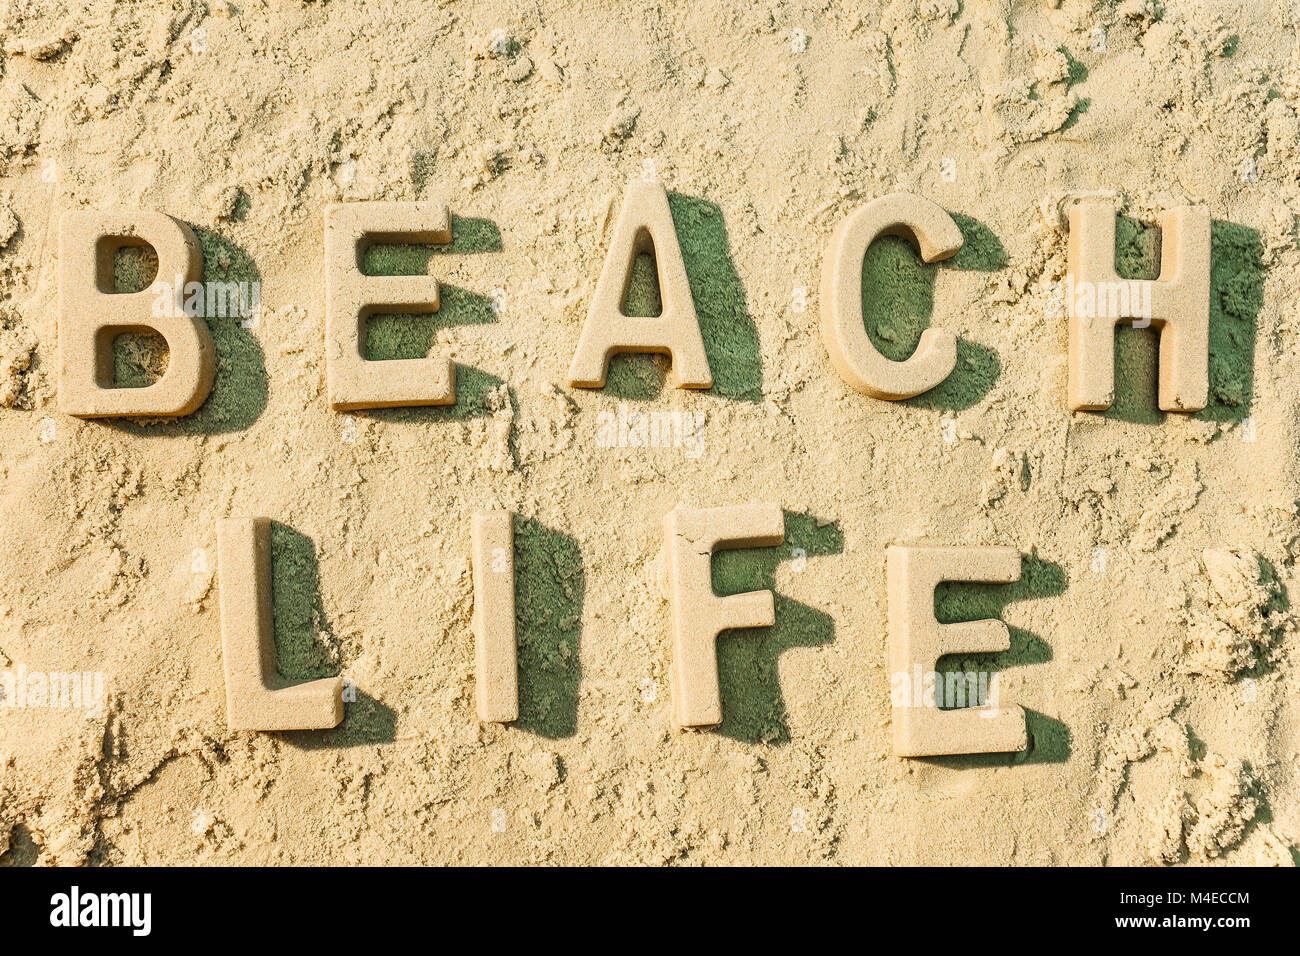 Vida de playa Foto de stock